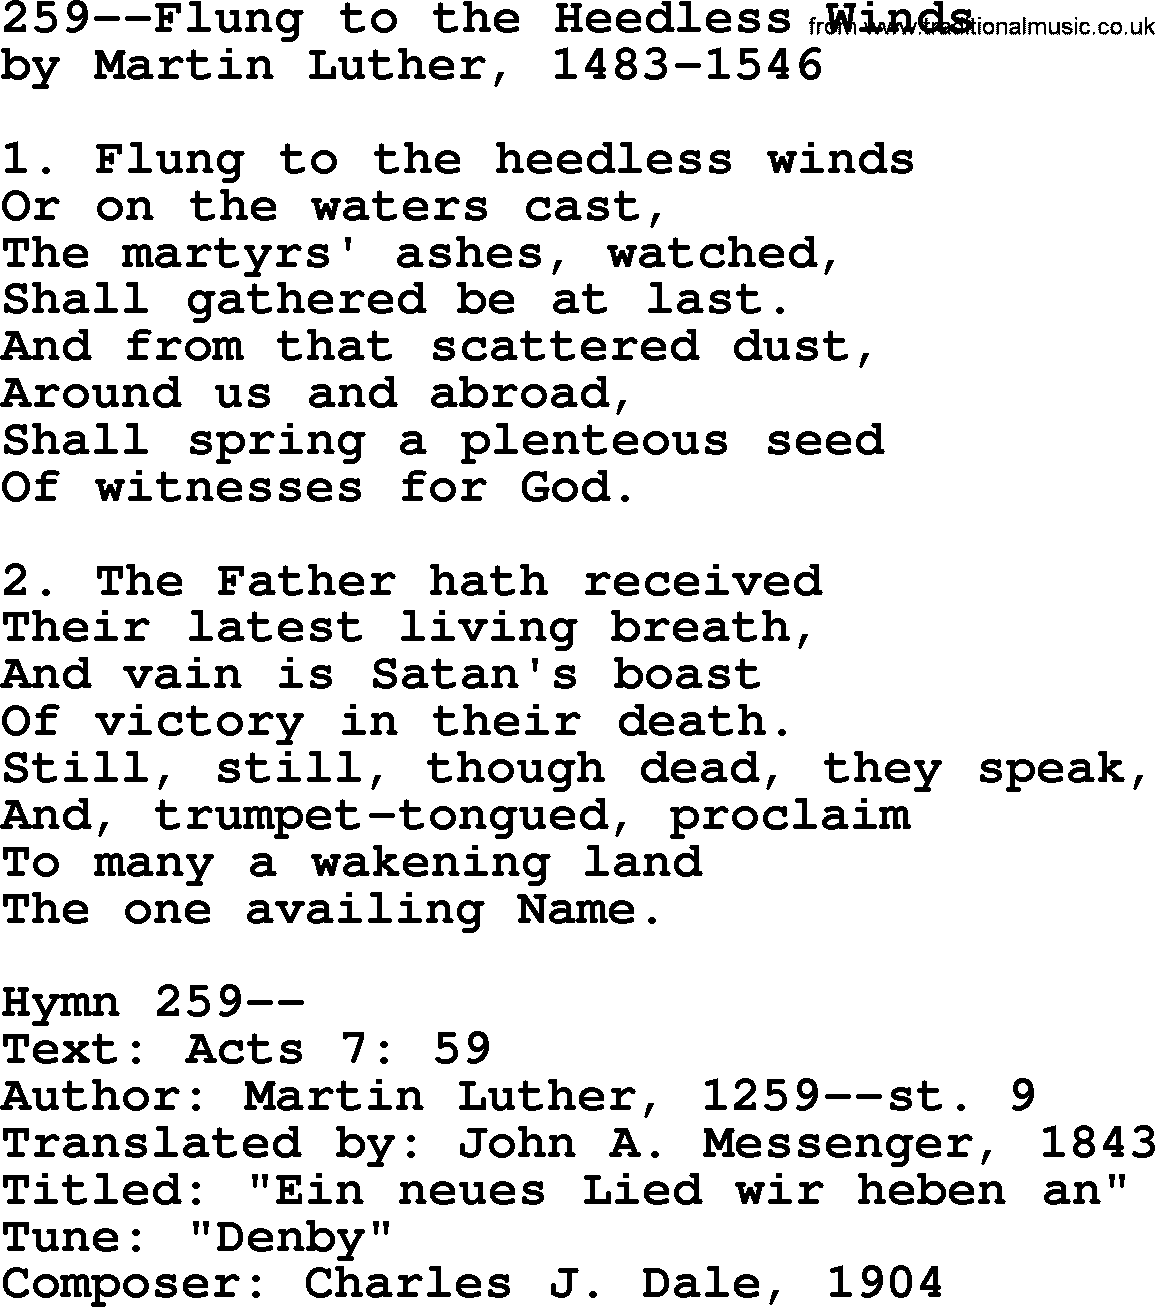 Lutheran Hymn: 259--Flung to the Heedless Winds.txt lyrics with PDF